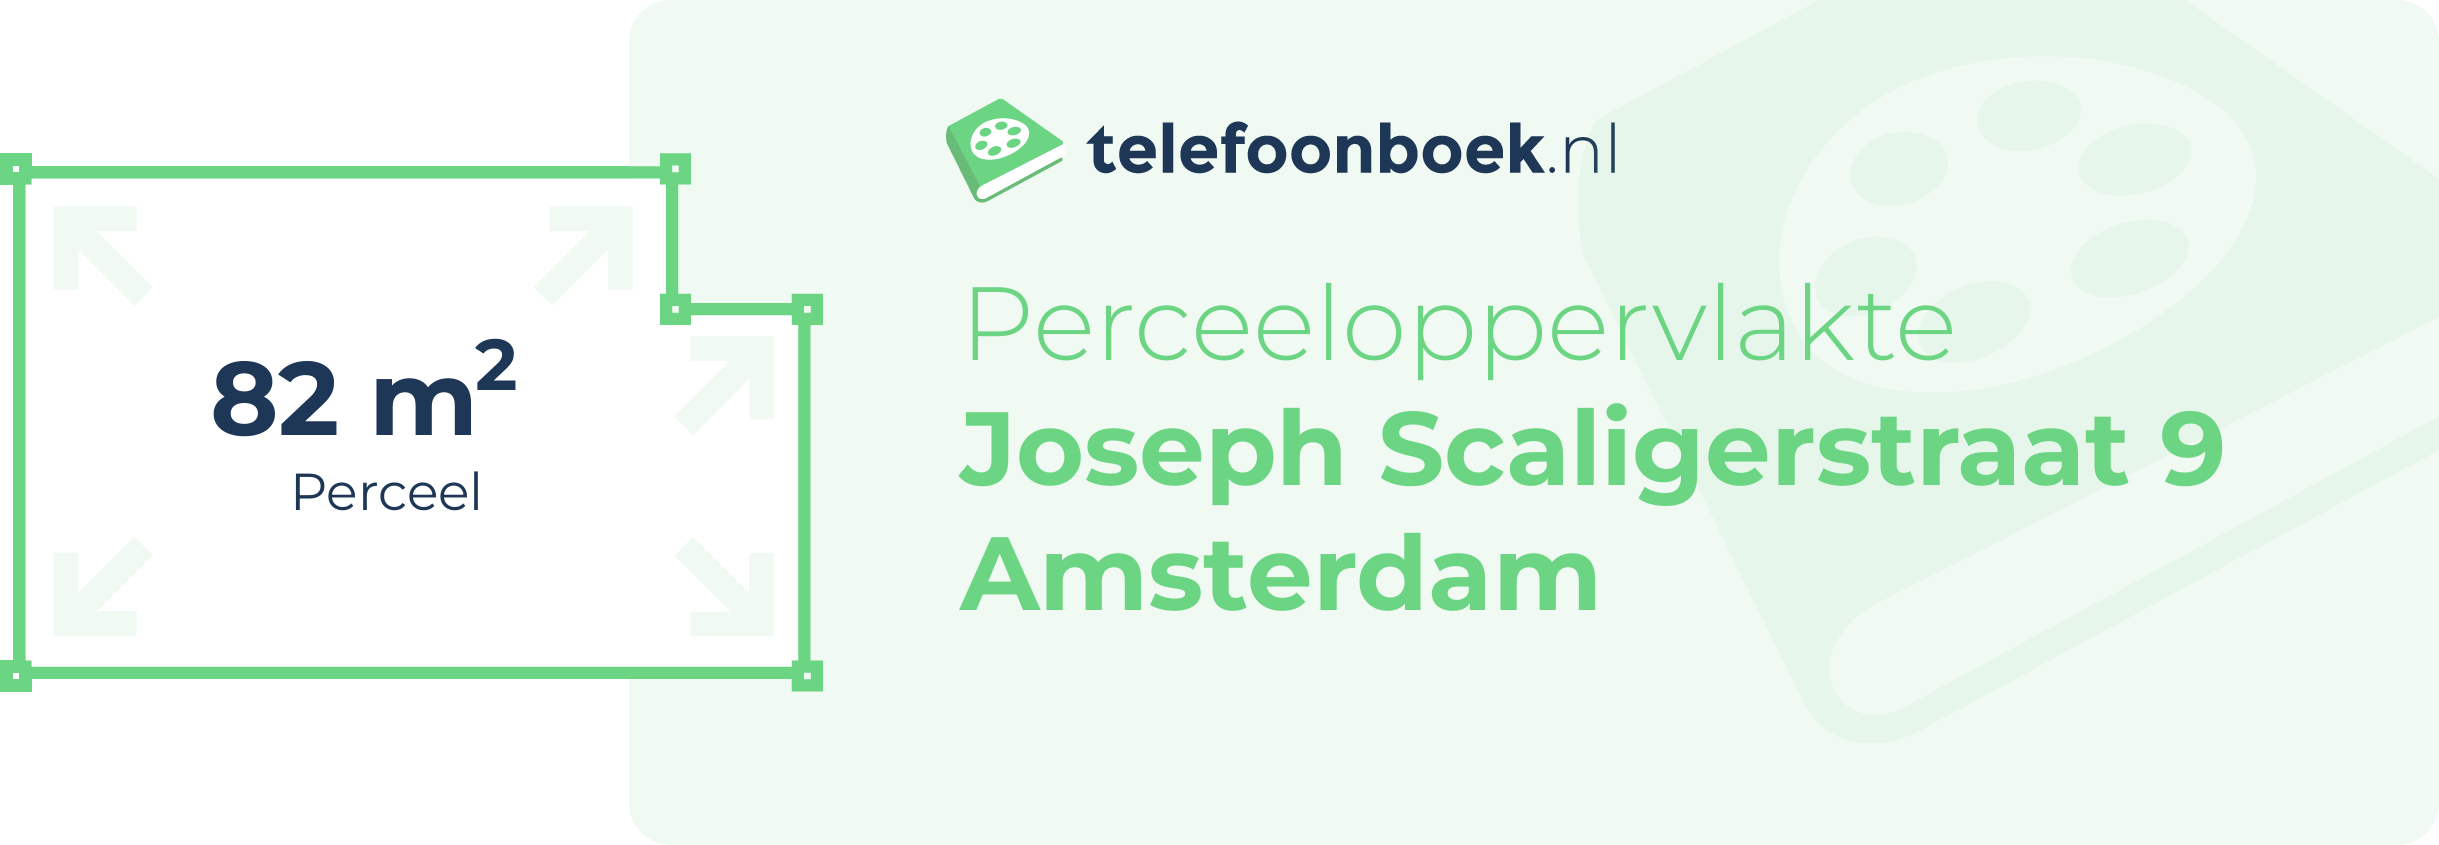 Perceeloppervlakte Joseph Scaligerstraat 9 Amsterdam